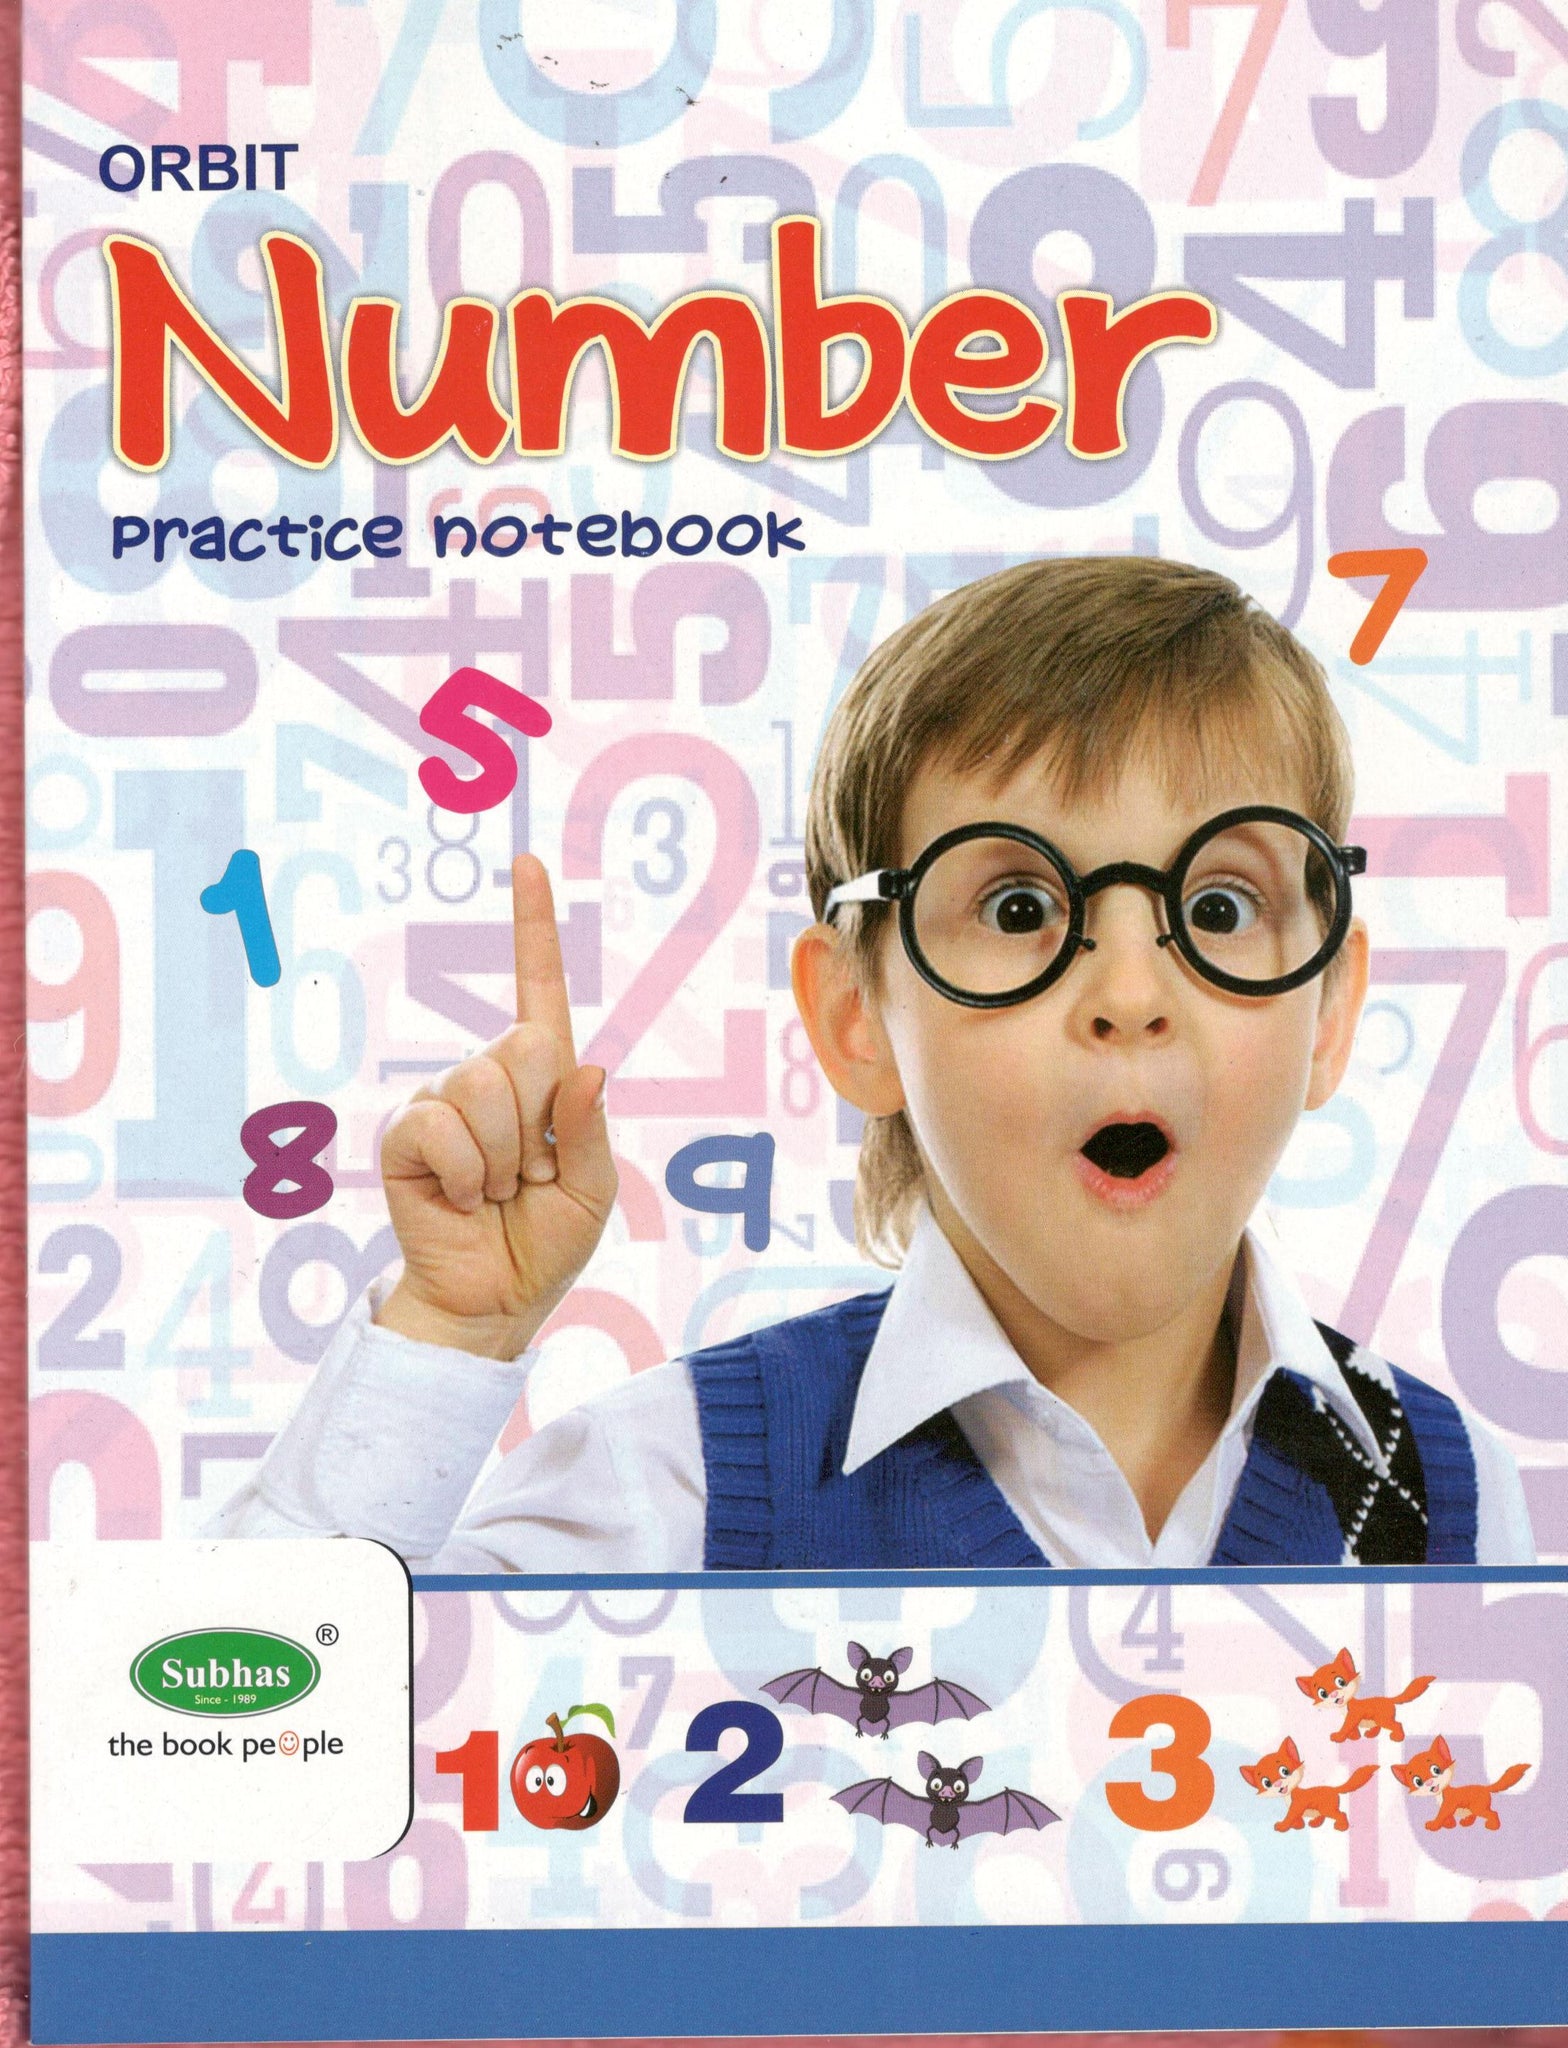 ORBIT Number Note Book